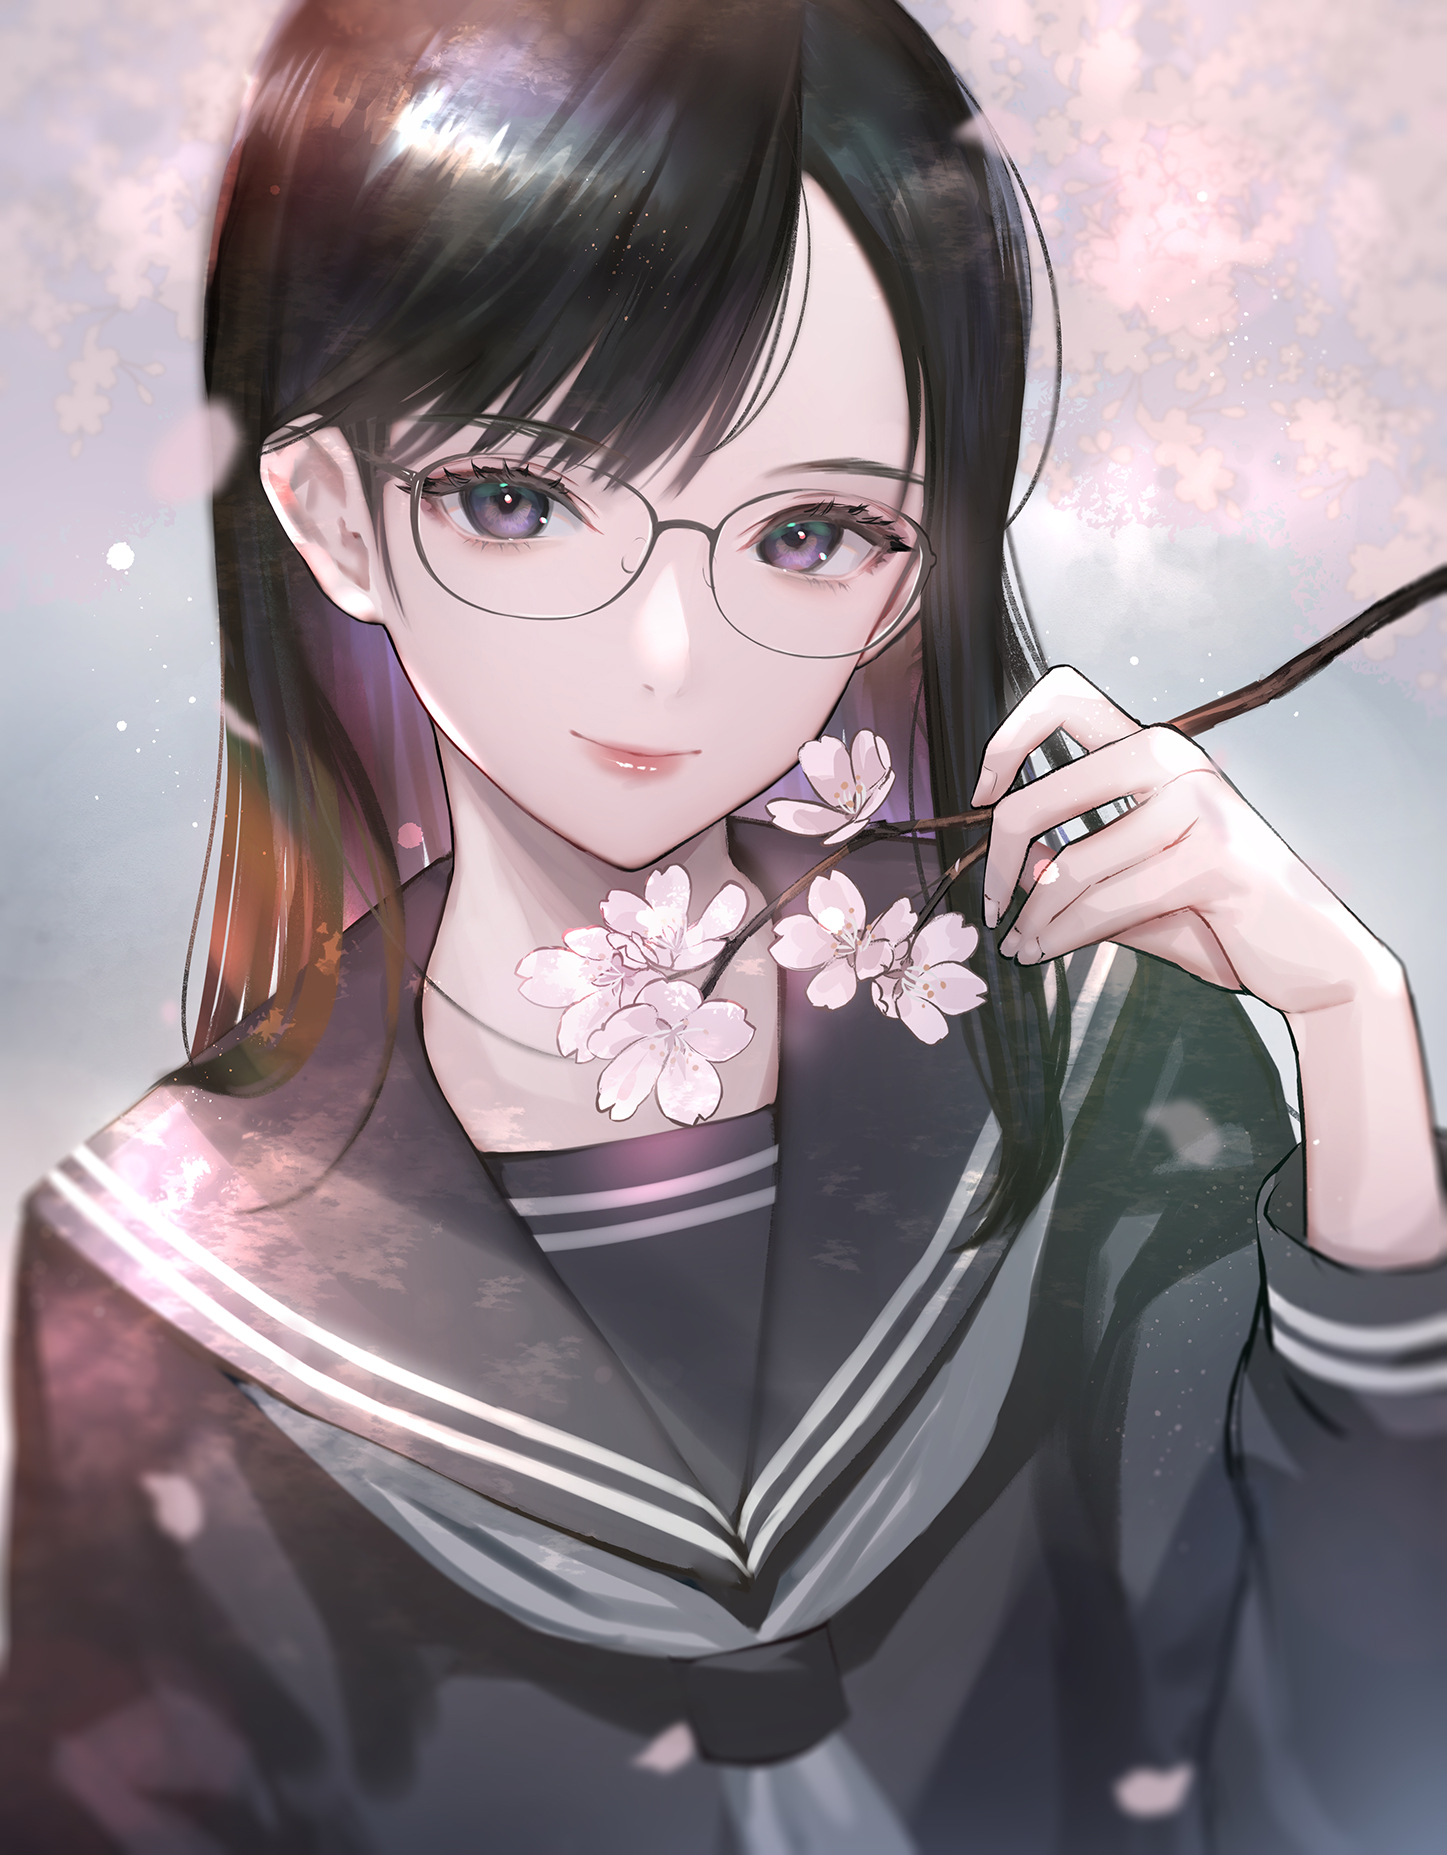 Anime 1447x1855 Hitowa anime girls dark hair school uniform purple eyes frontal view flowers glasses petals smiling schoolgirl